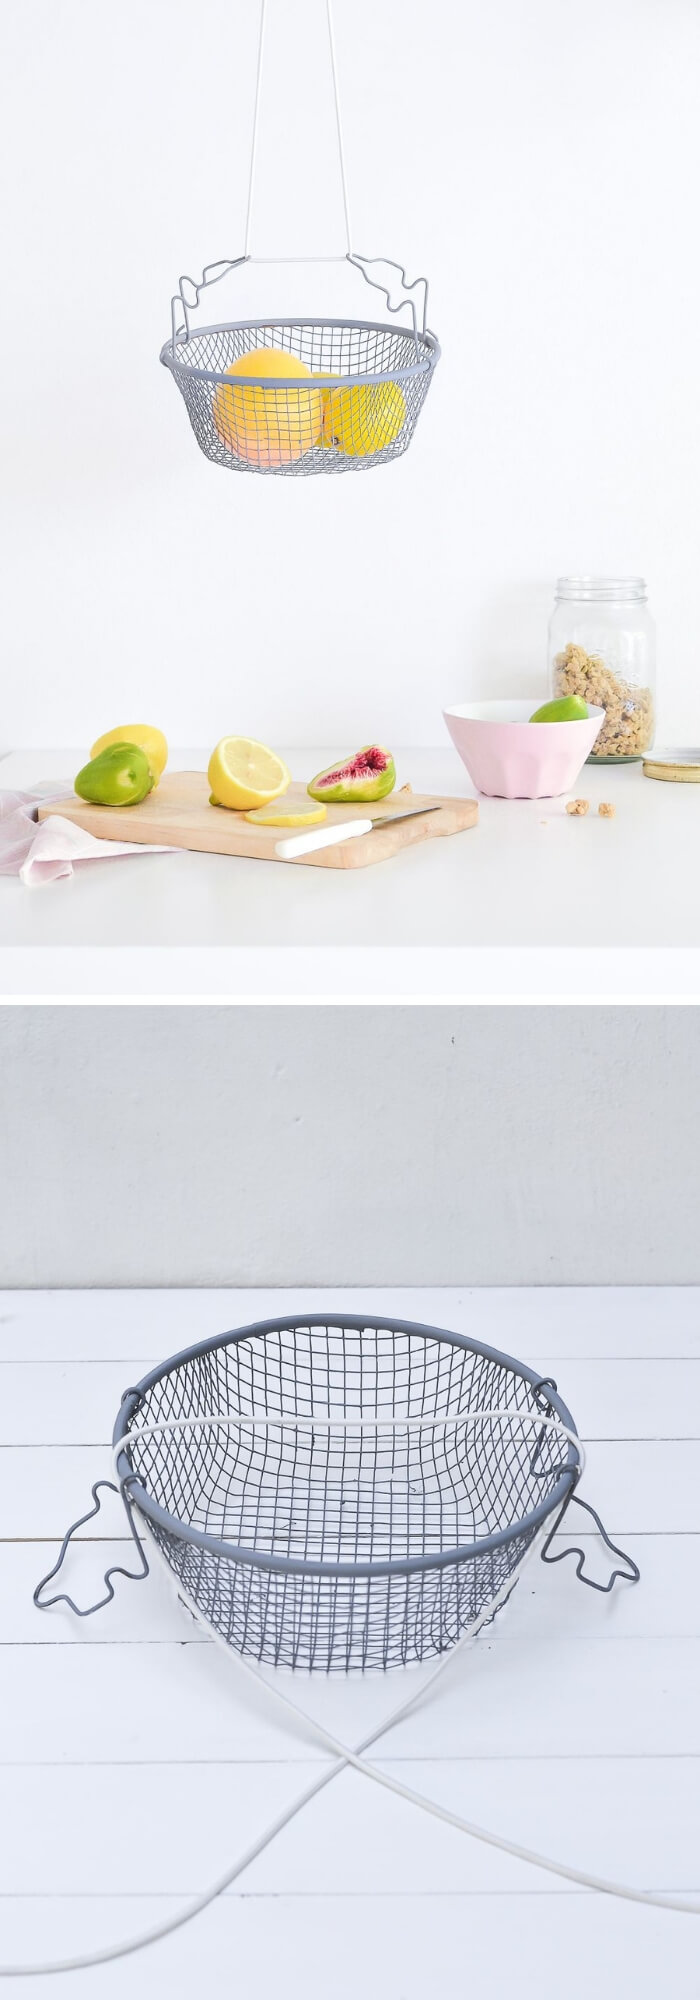 DIY Hanging Fruit Basket | Best Fruit and Vegetable Storage Ideas For Your Kitchen